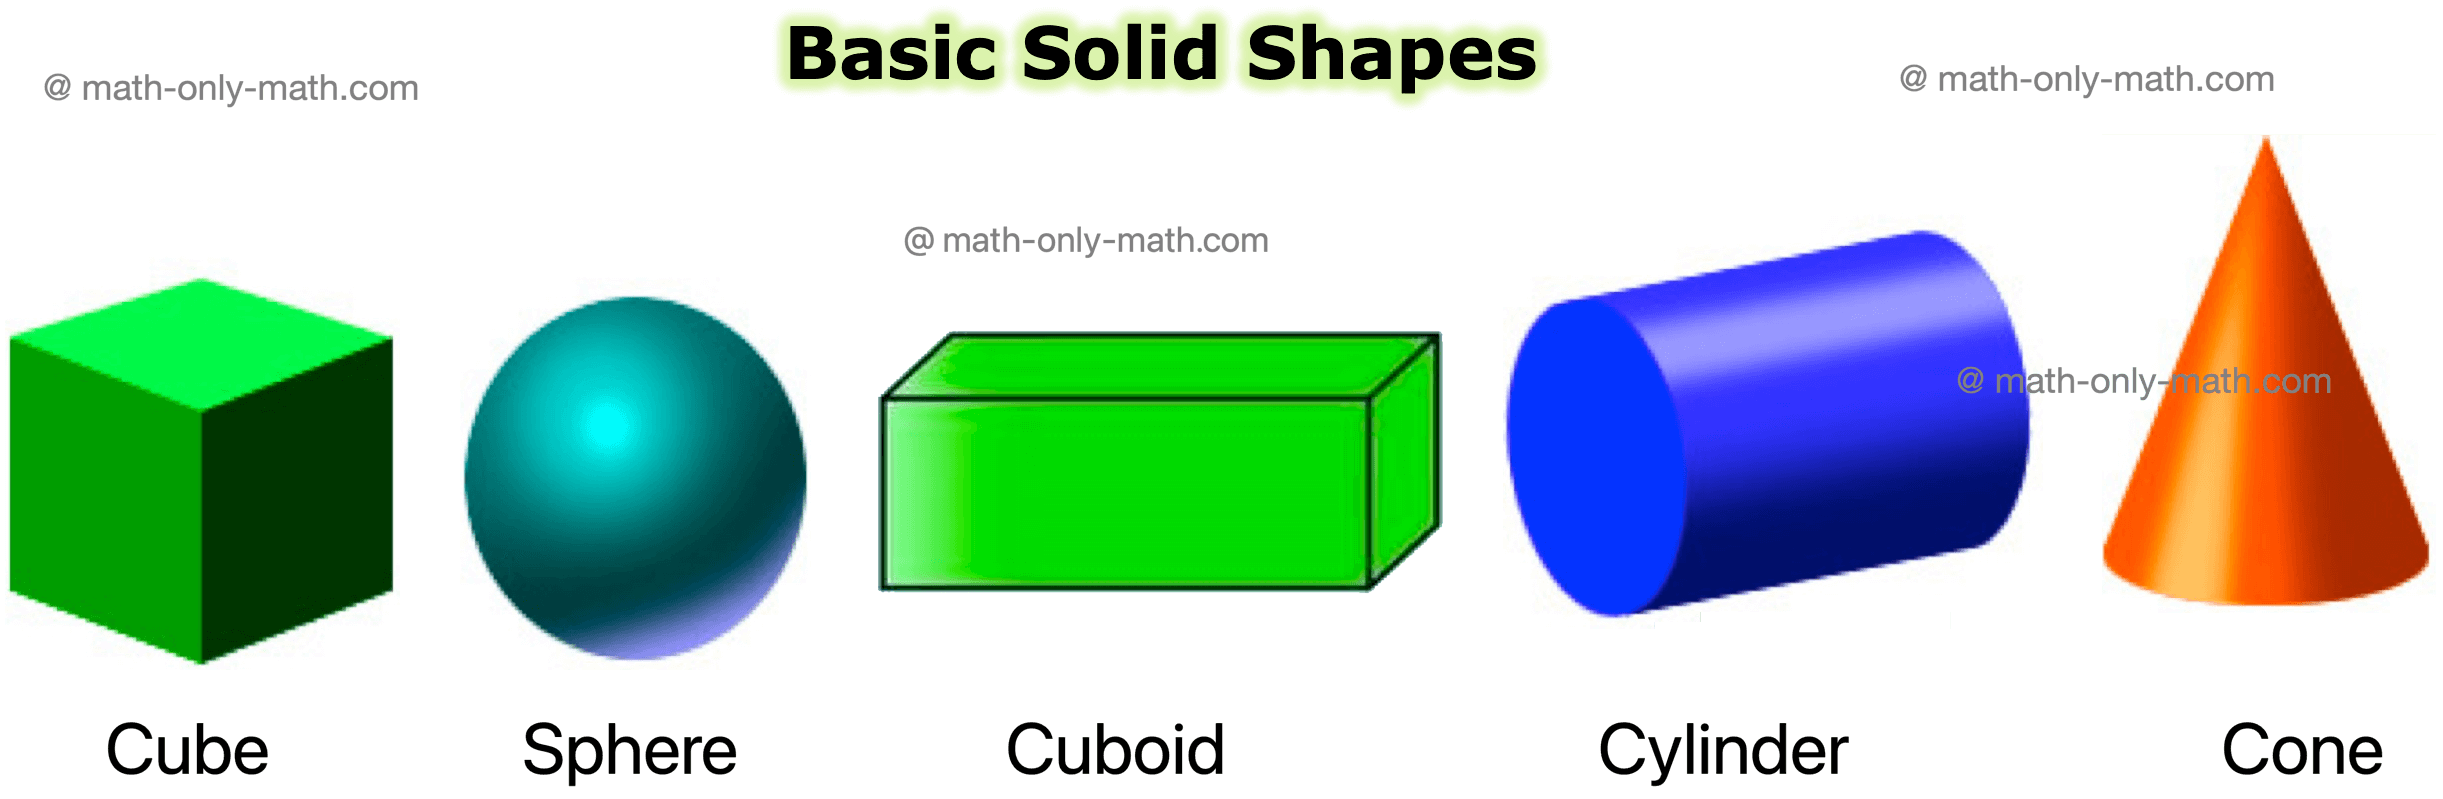 Basic Solid Shapes